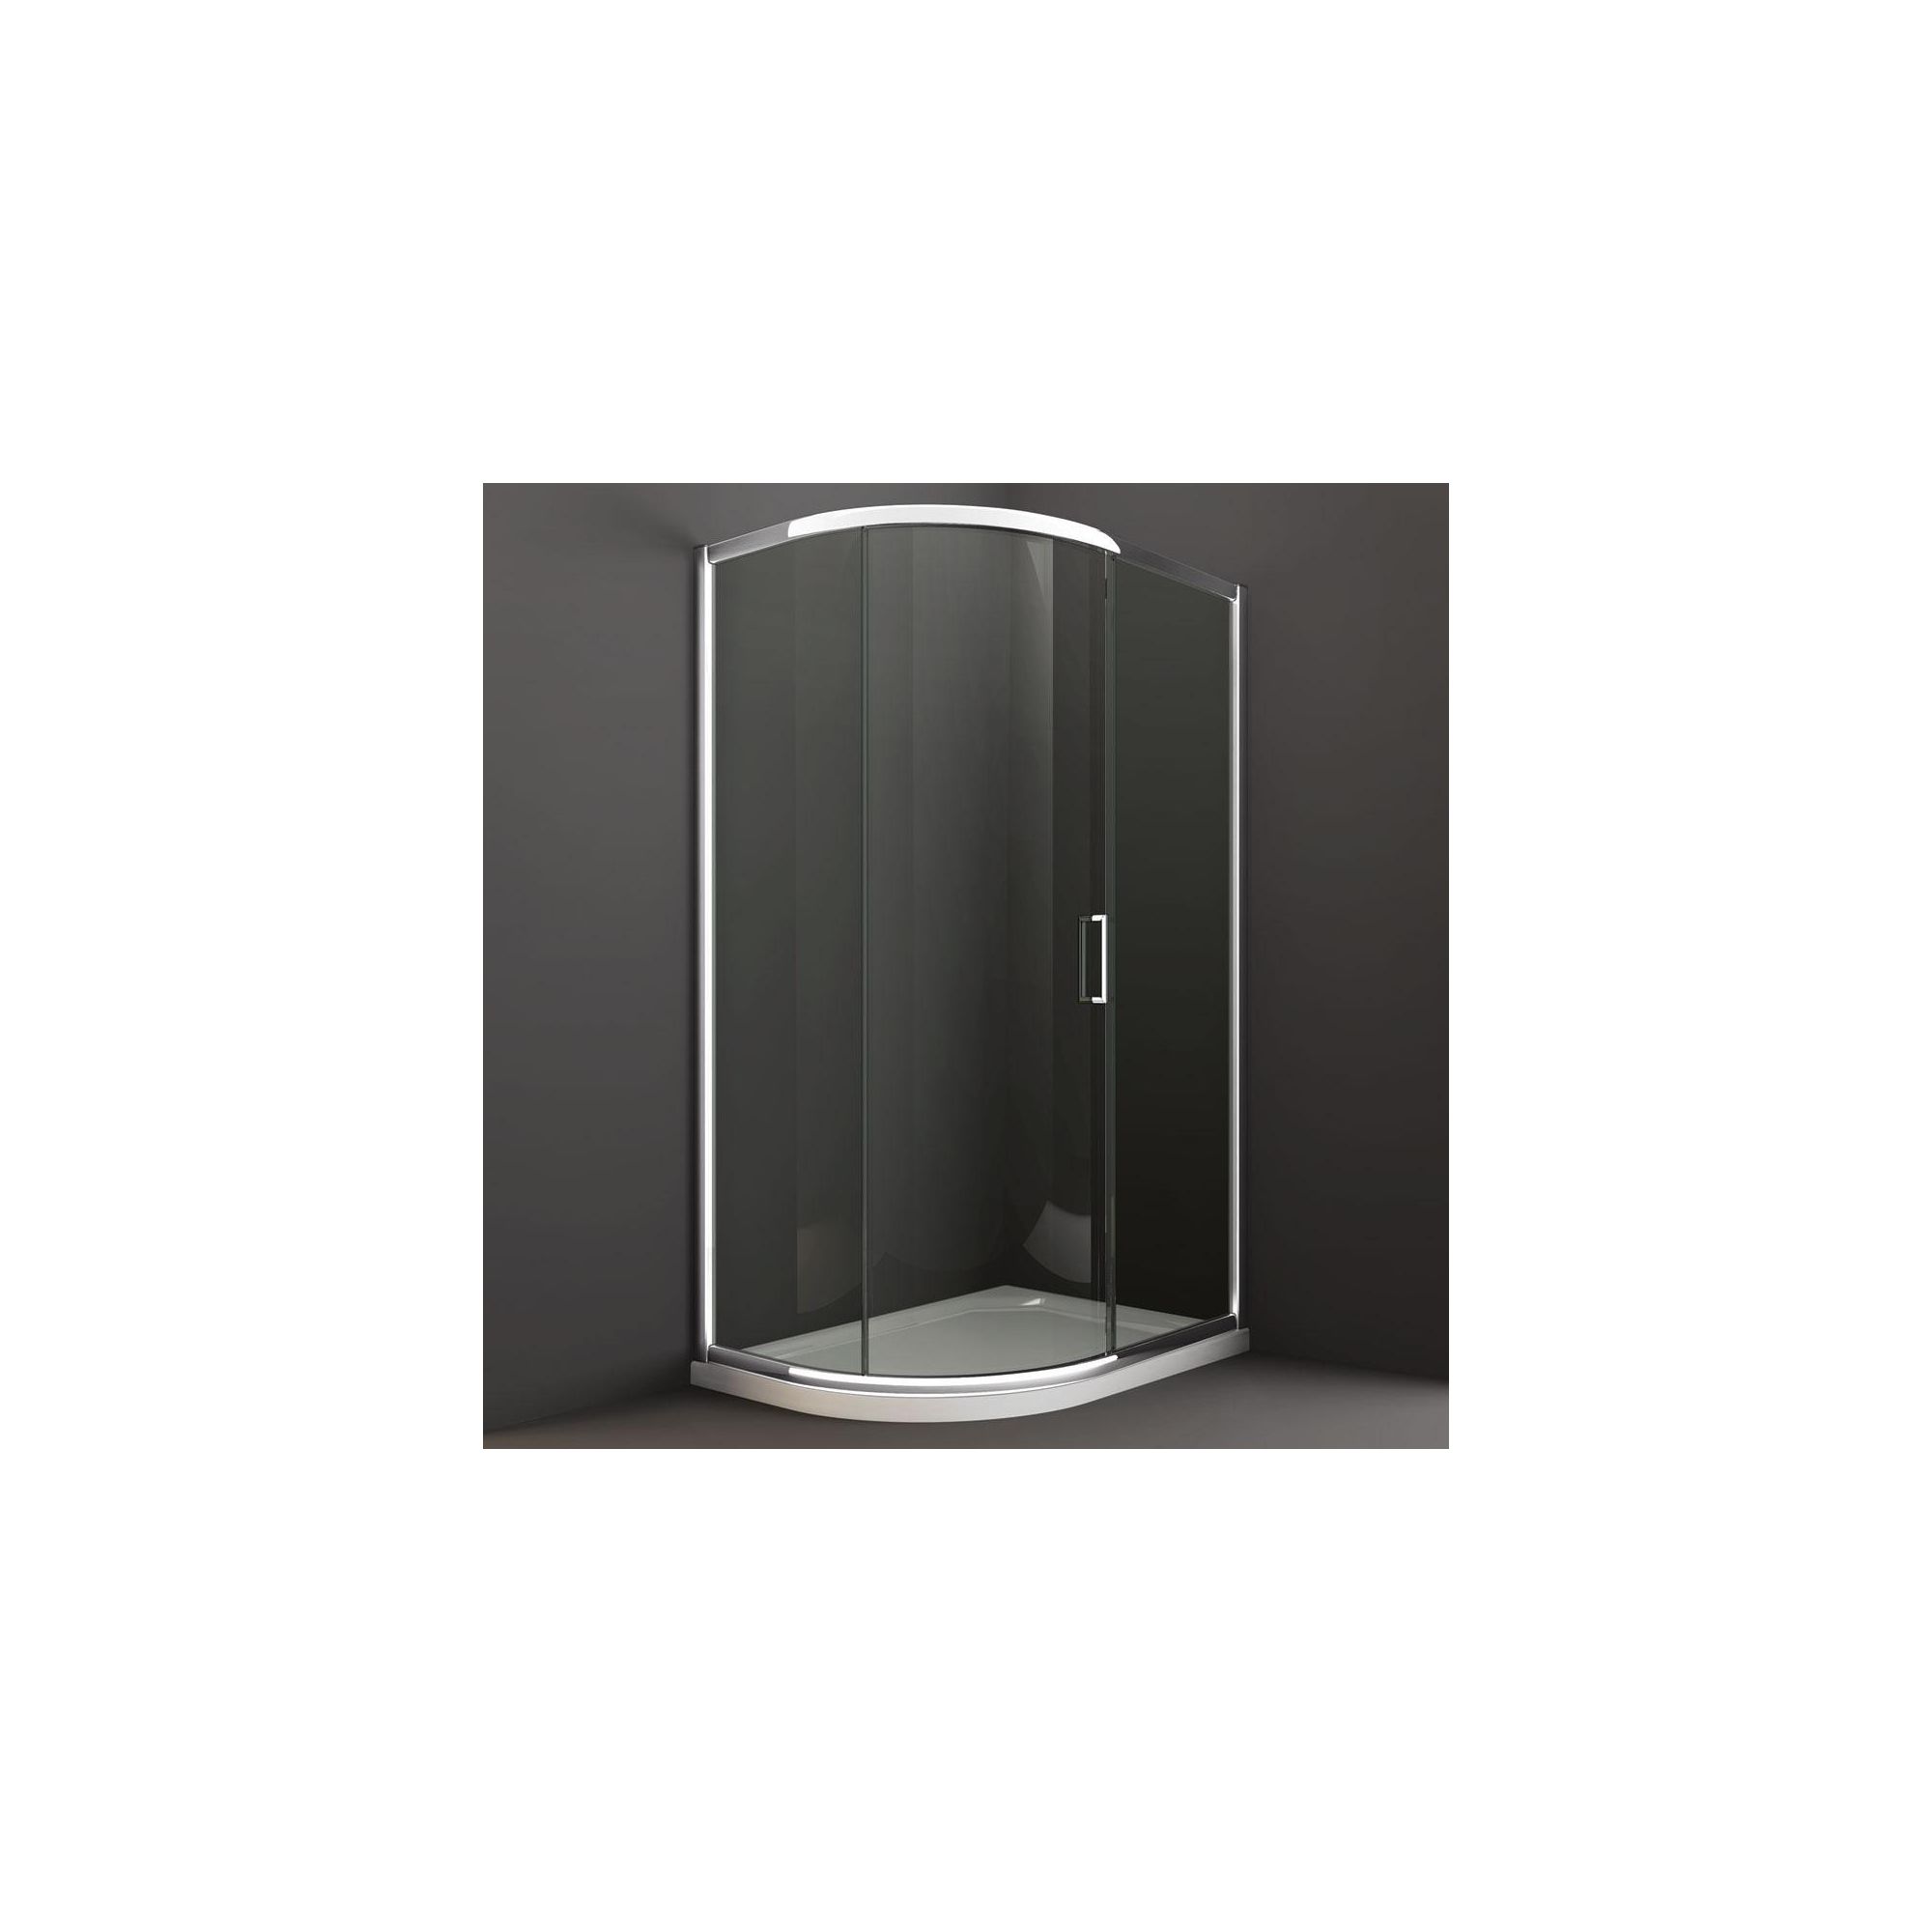 Merlyn Series 8 Offset Quadrant Shower Door, 1200mm x 900mm, Chrome Frame, 8mm Glass at Tescos Direct